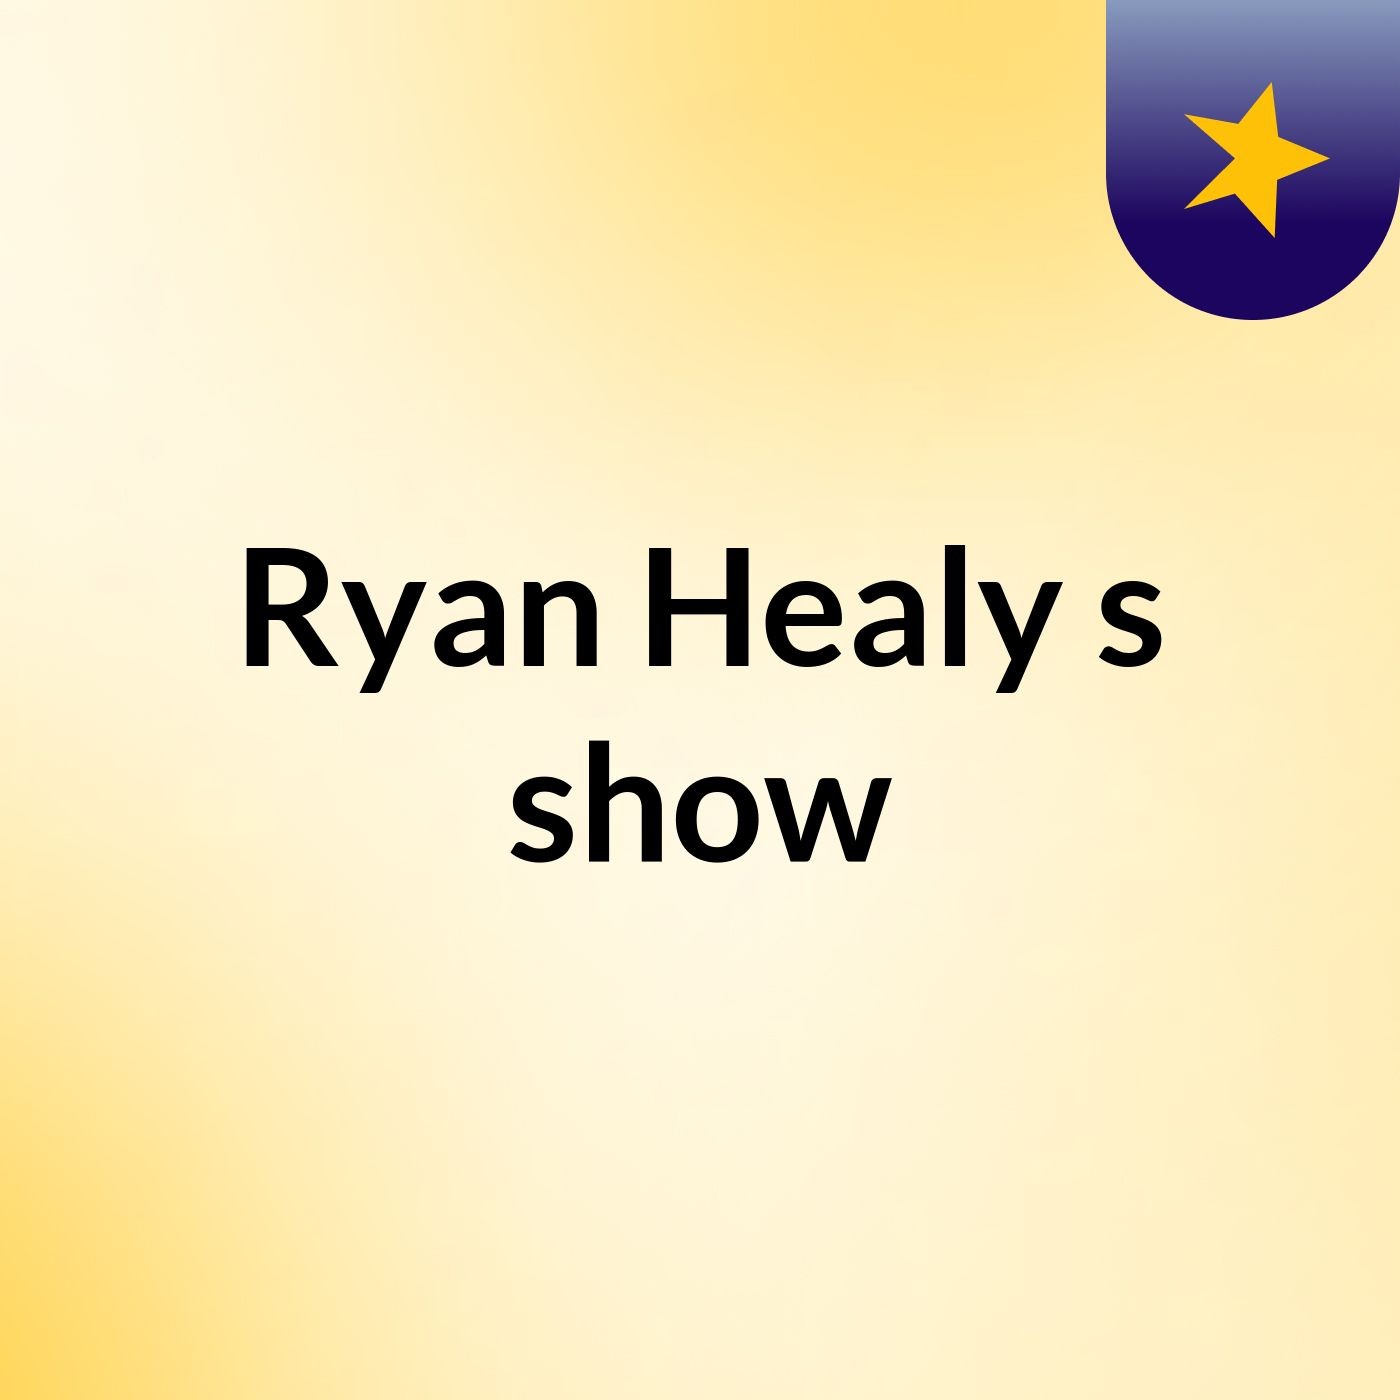 Ryan Healy's show